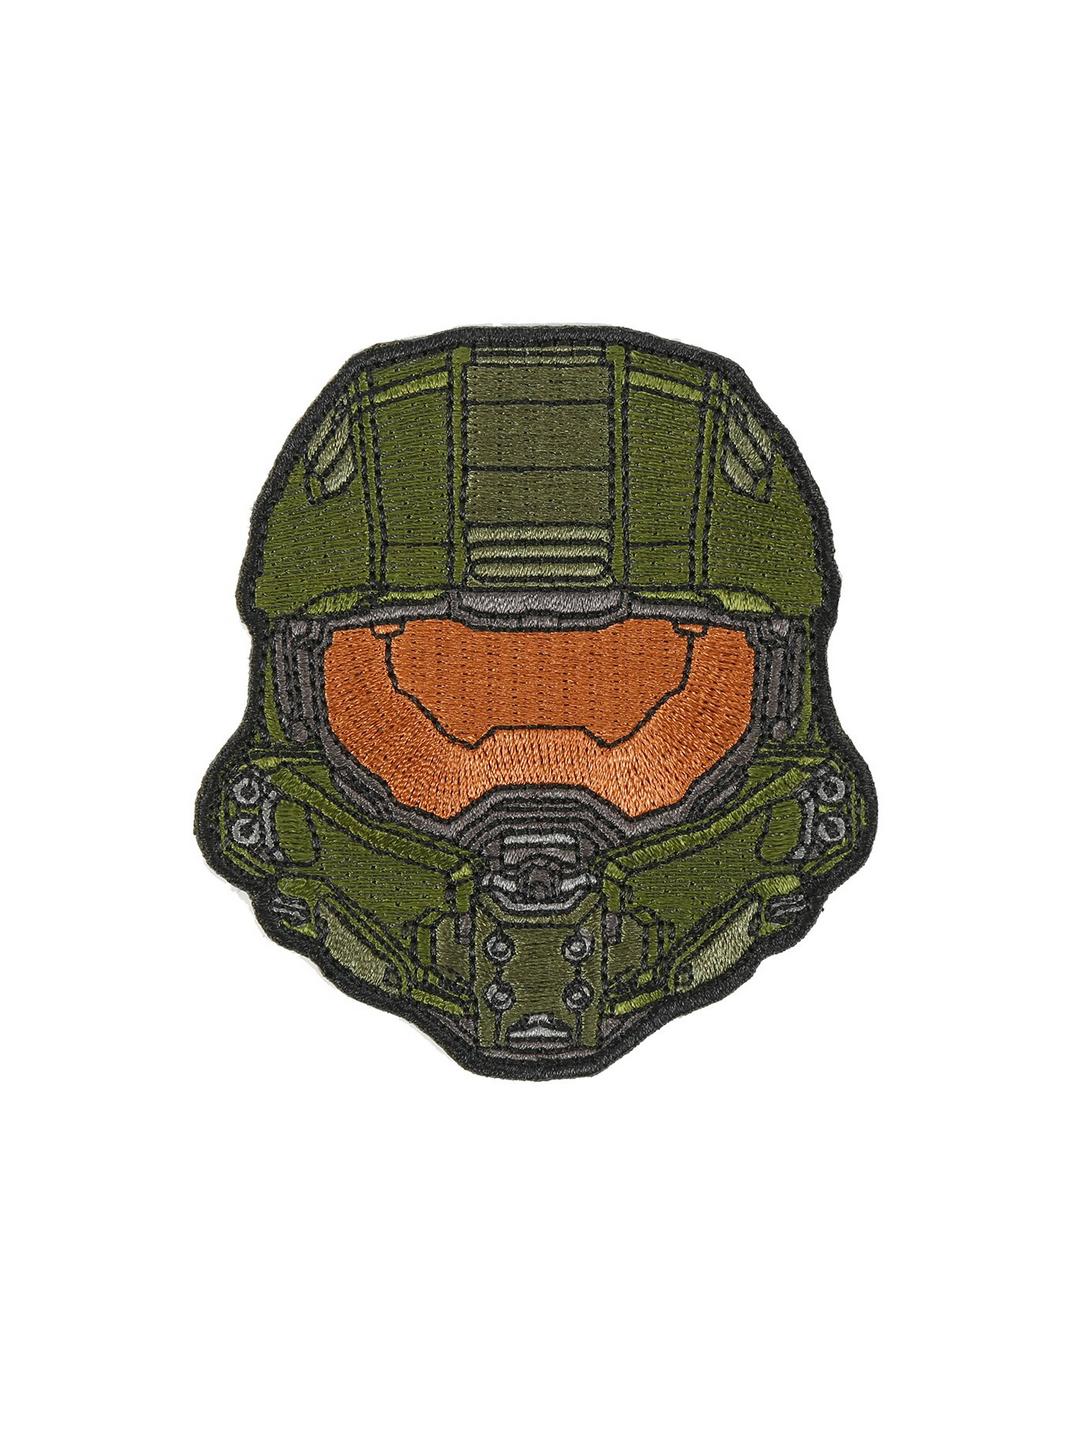 Halo Master Chief Helmet Iron-On Patch, , hi-res